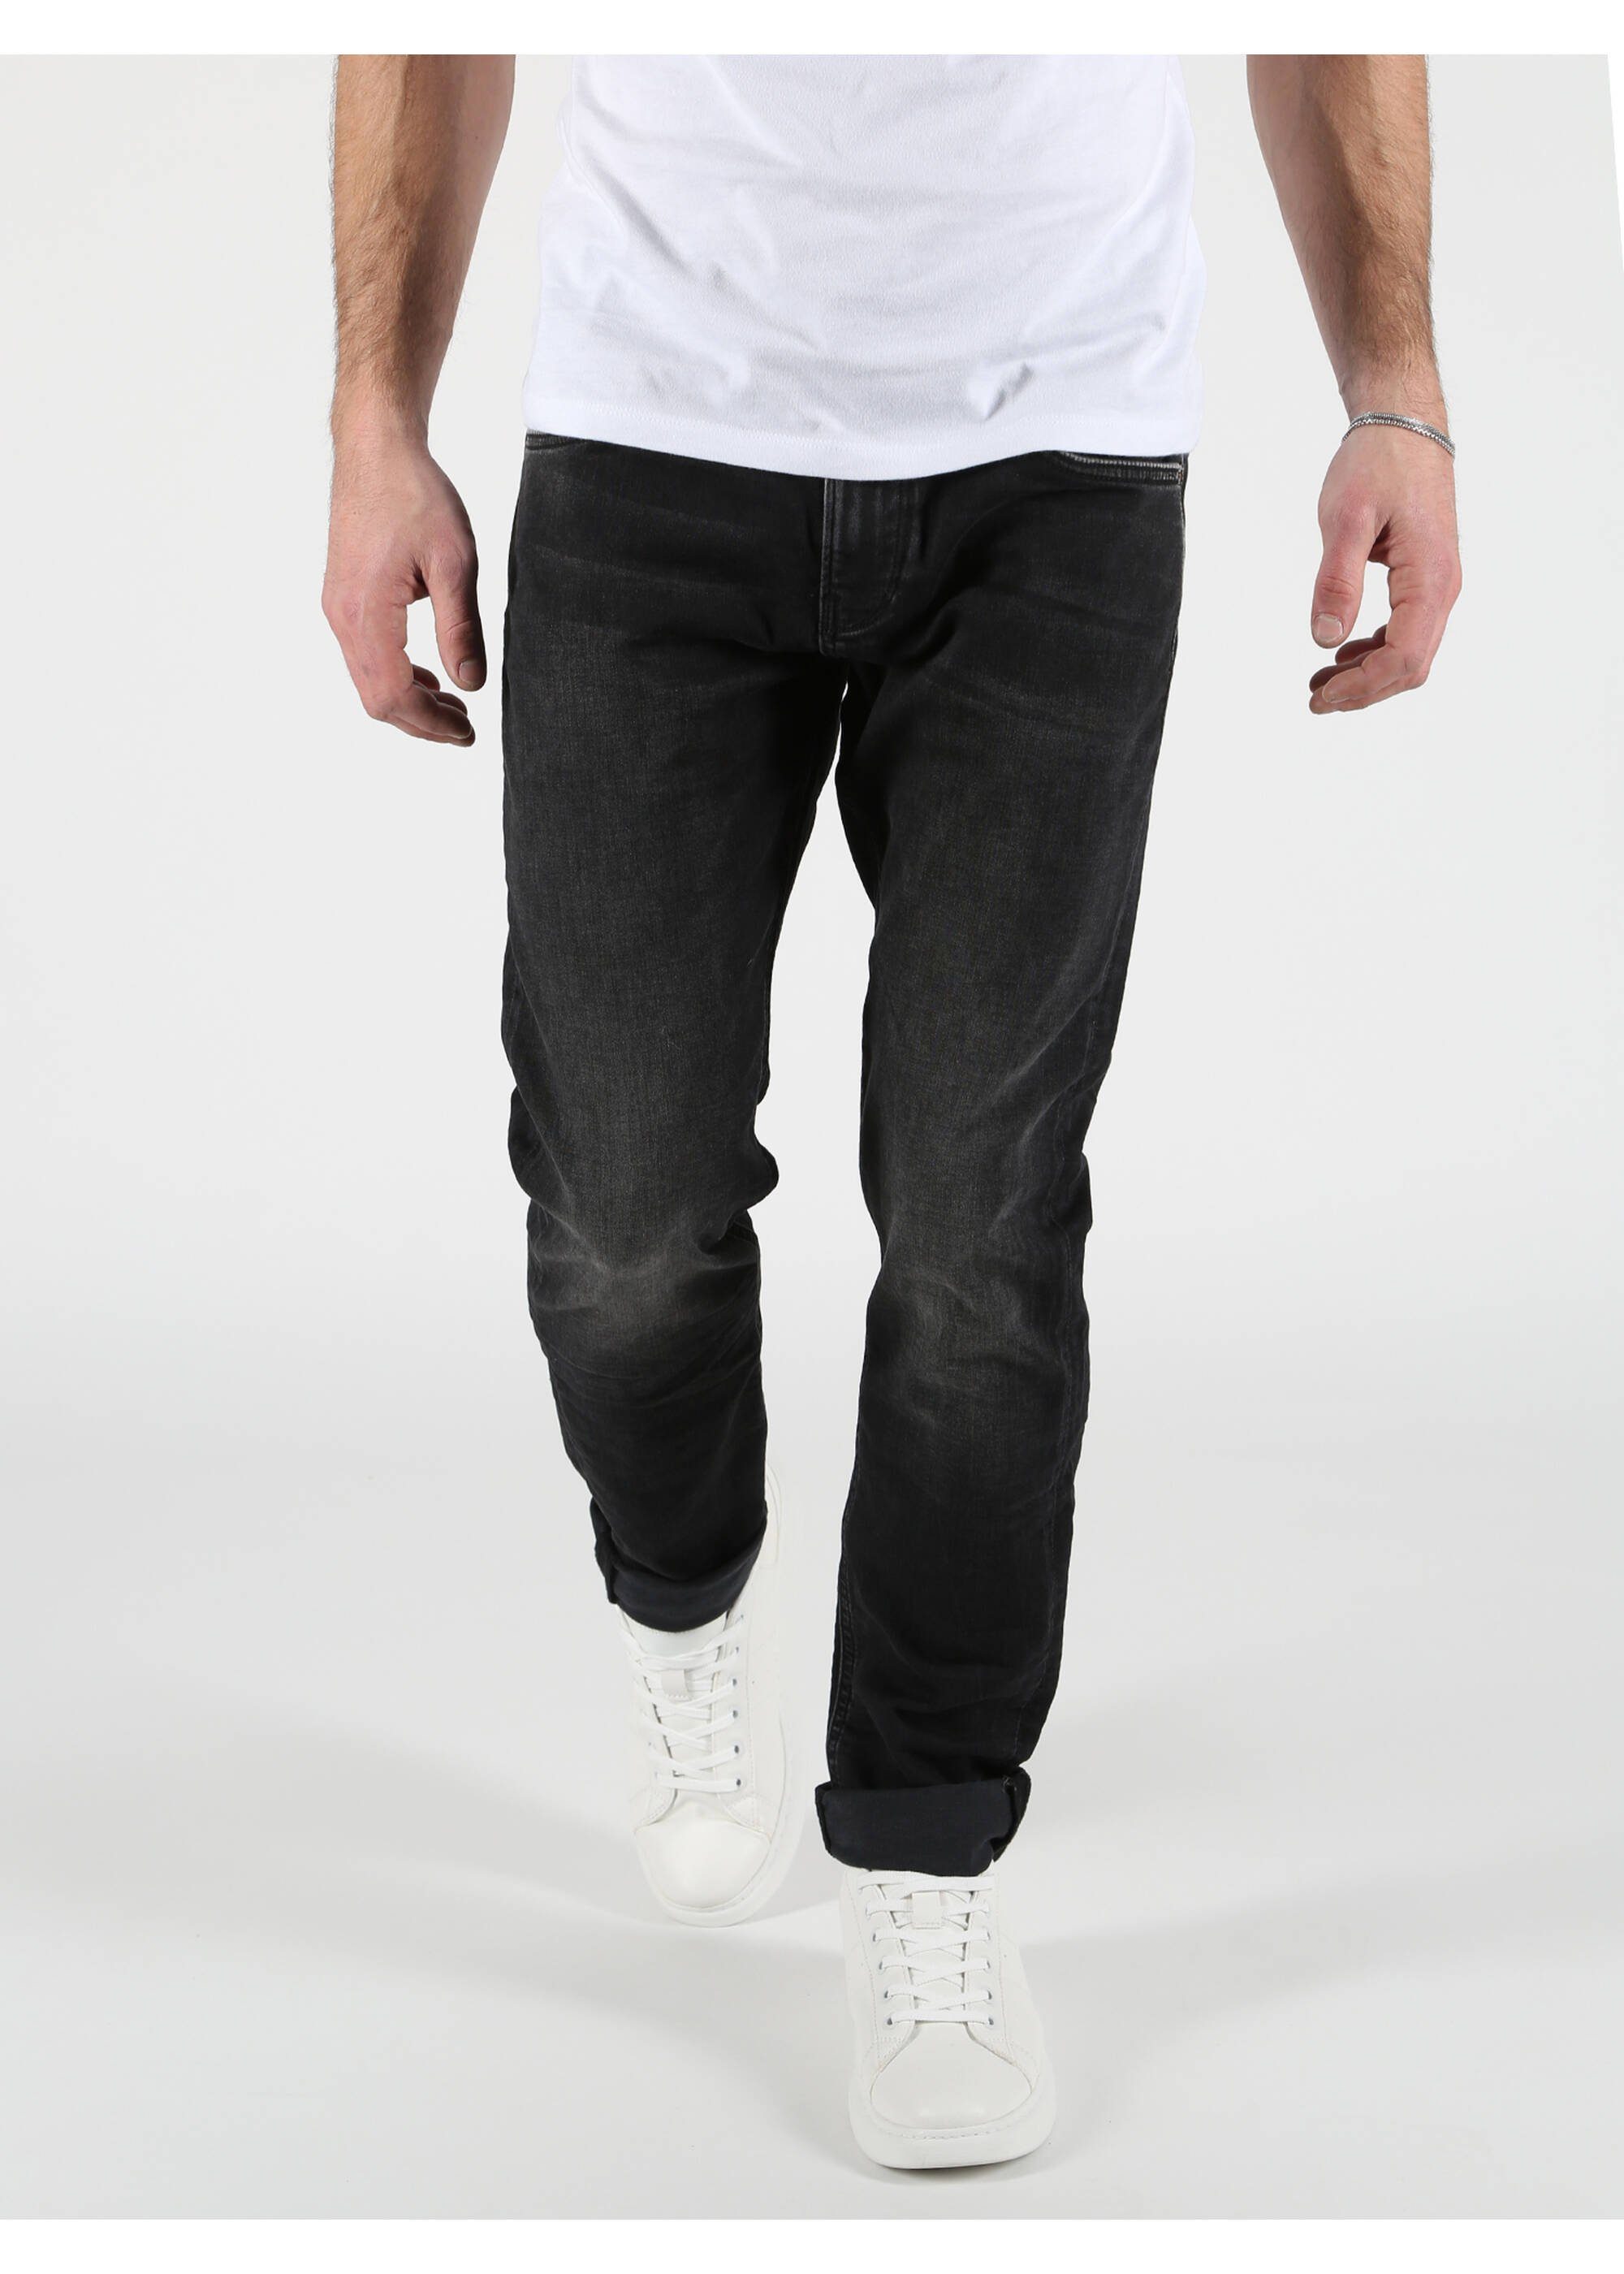 5-Pocket-Jeans Denim of Ricardo Miracle